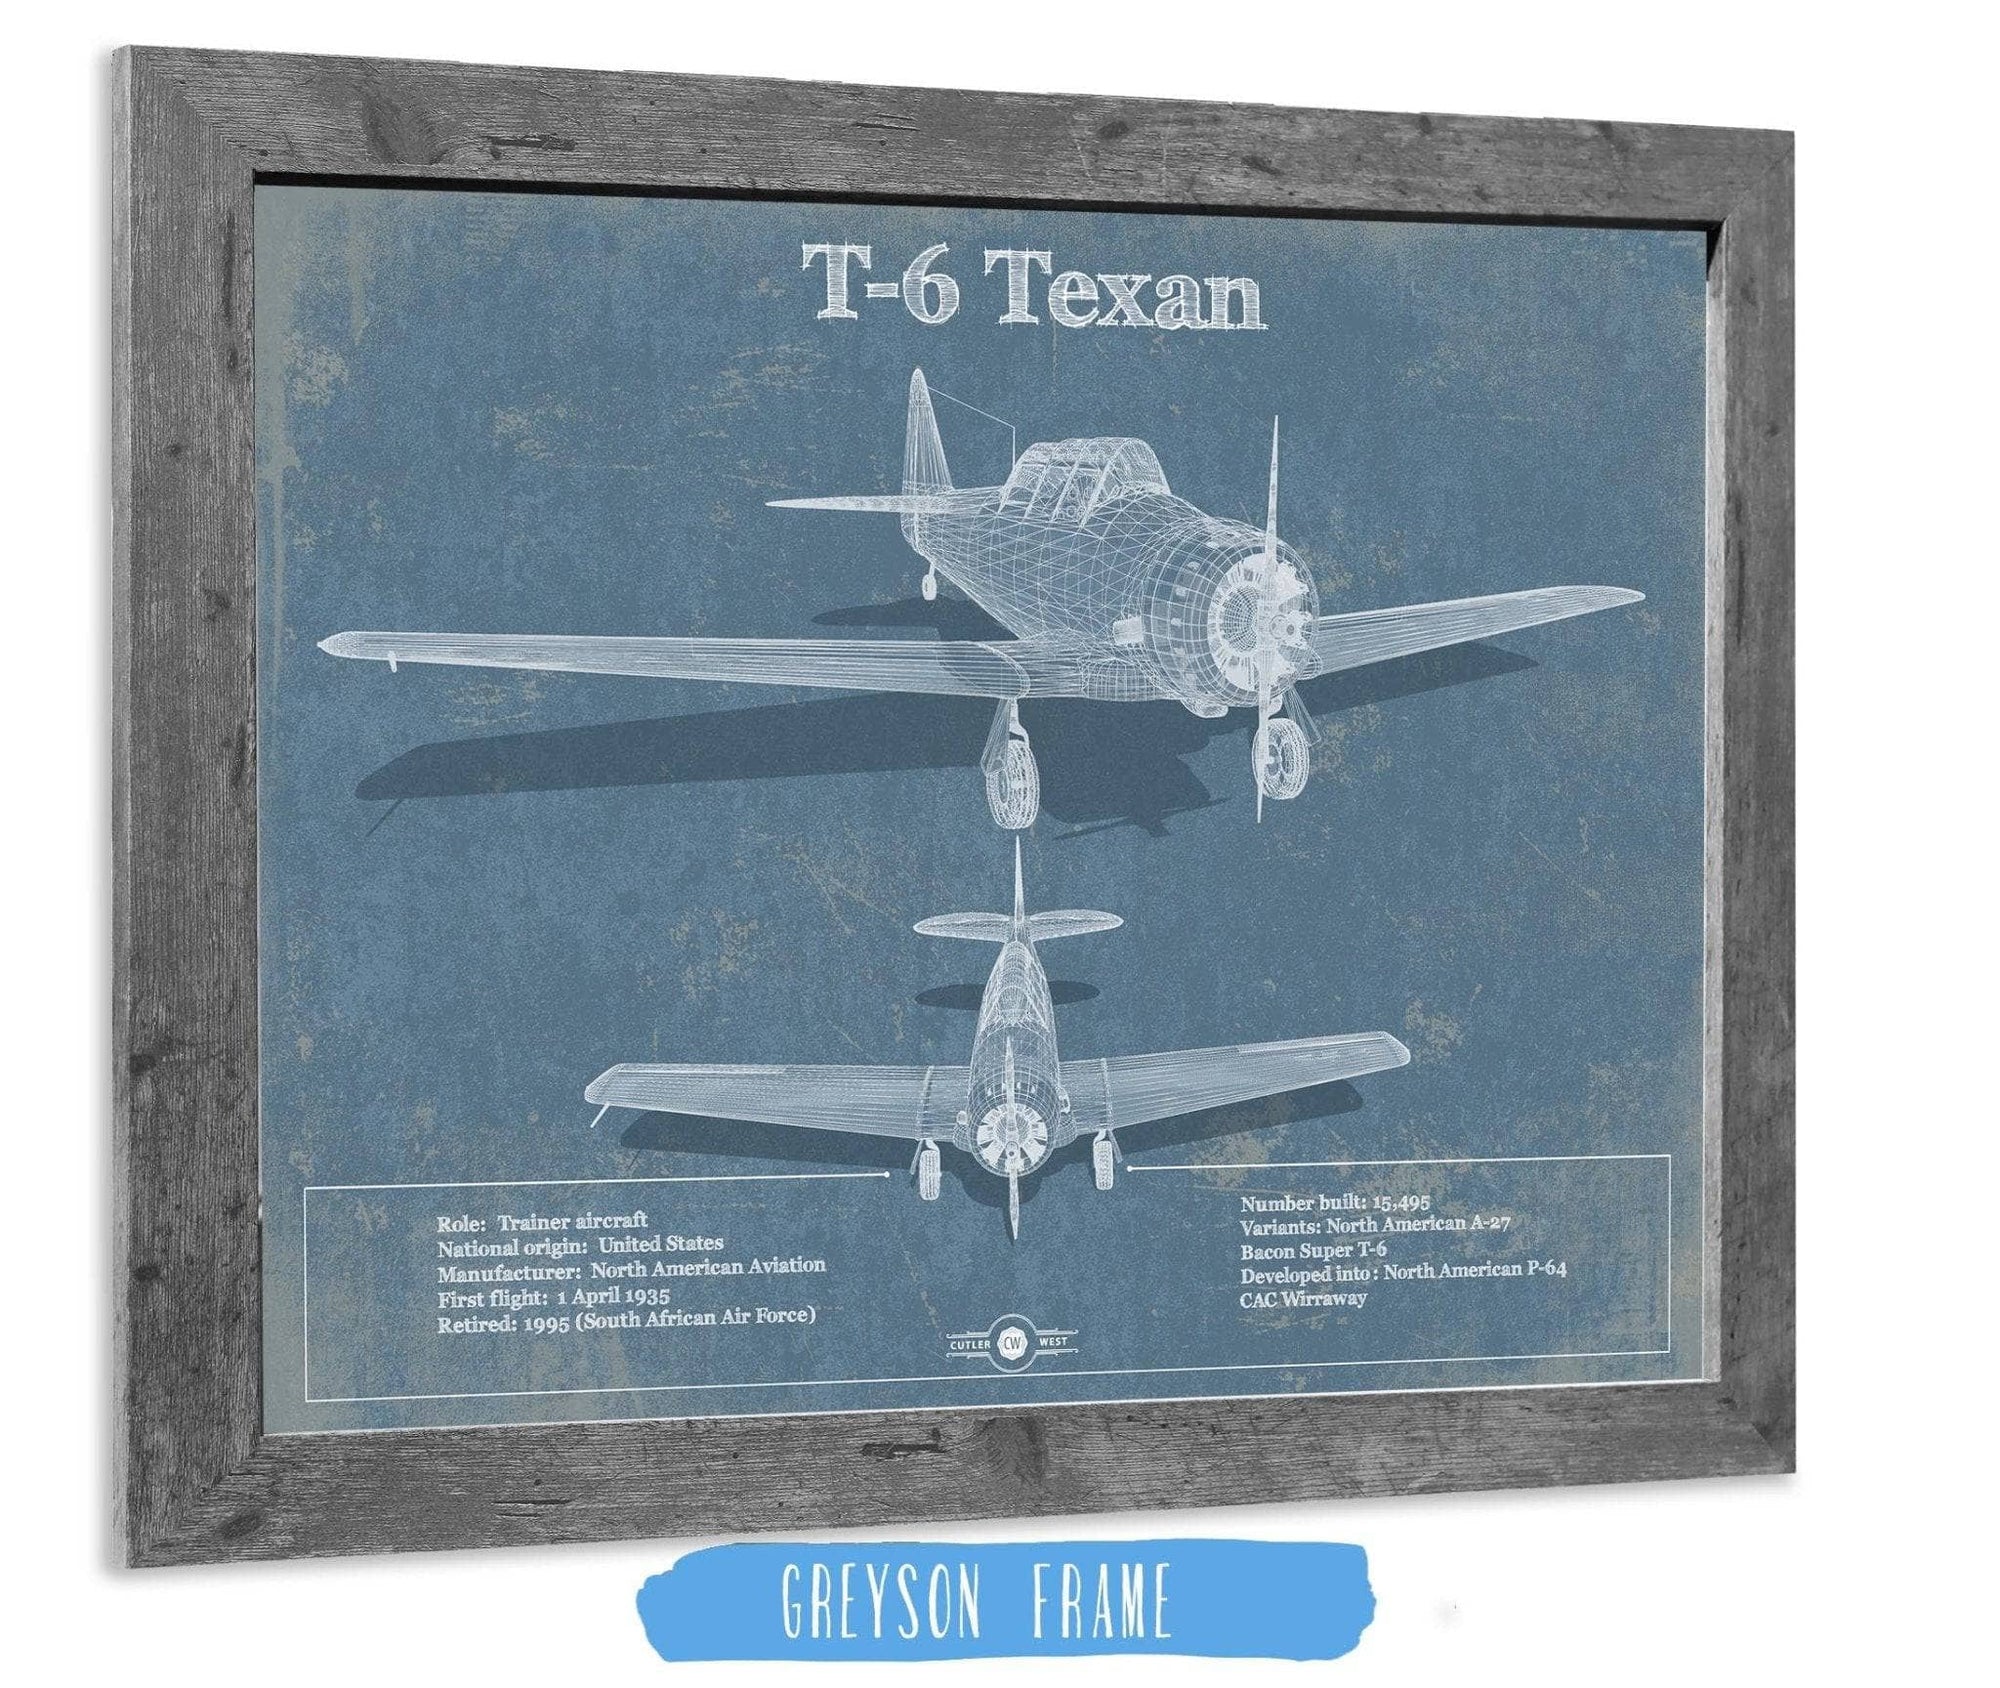 Cutler West Military Aircraft 14" x 11" / Greyson Frame T-6 Texan Aircraft Blueprint Original Military Wall Art 787363204_31321